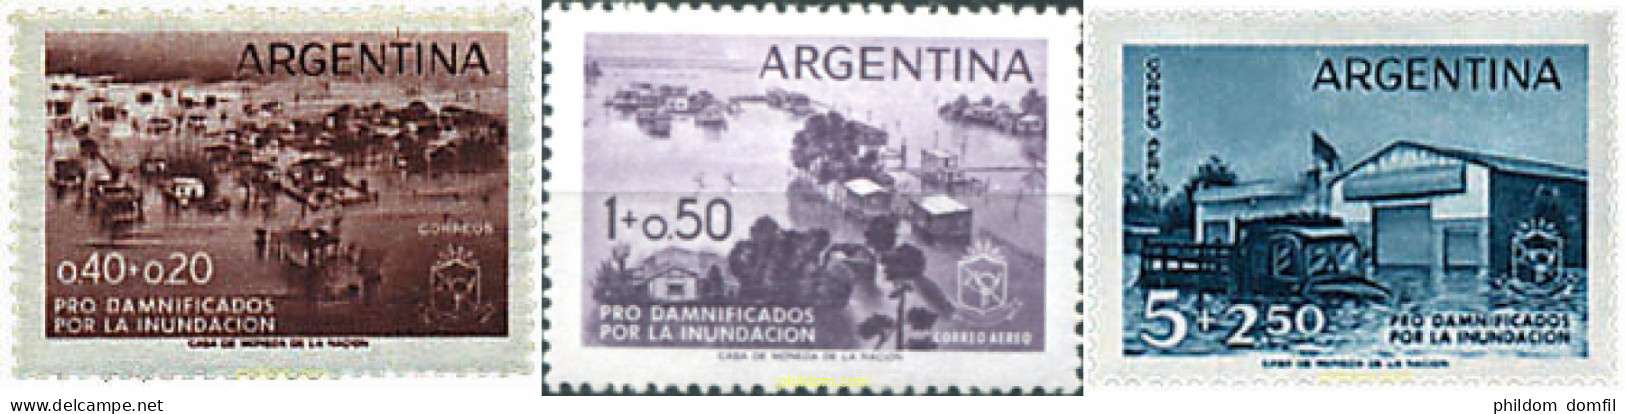 726232 HINGED ARGENTINA 1958 PRO-INUNDACIONES - Unused Stamps